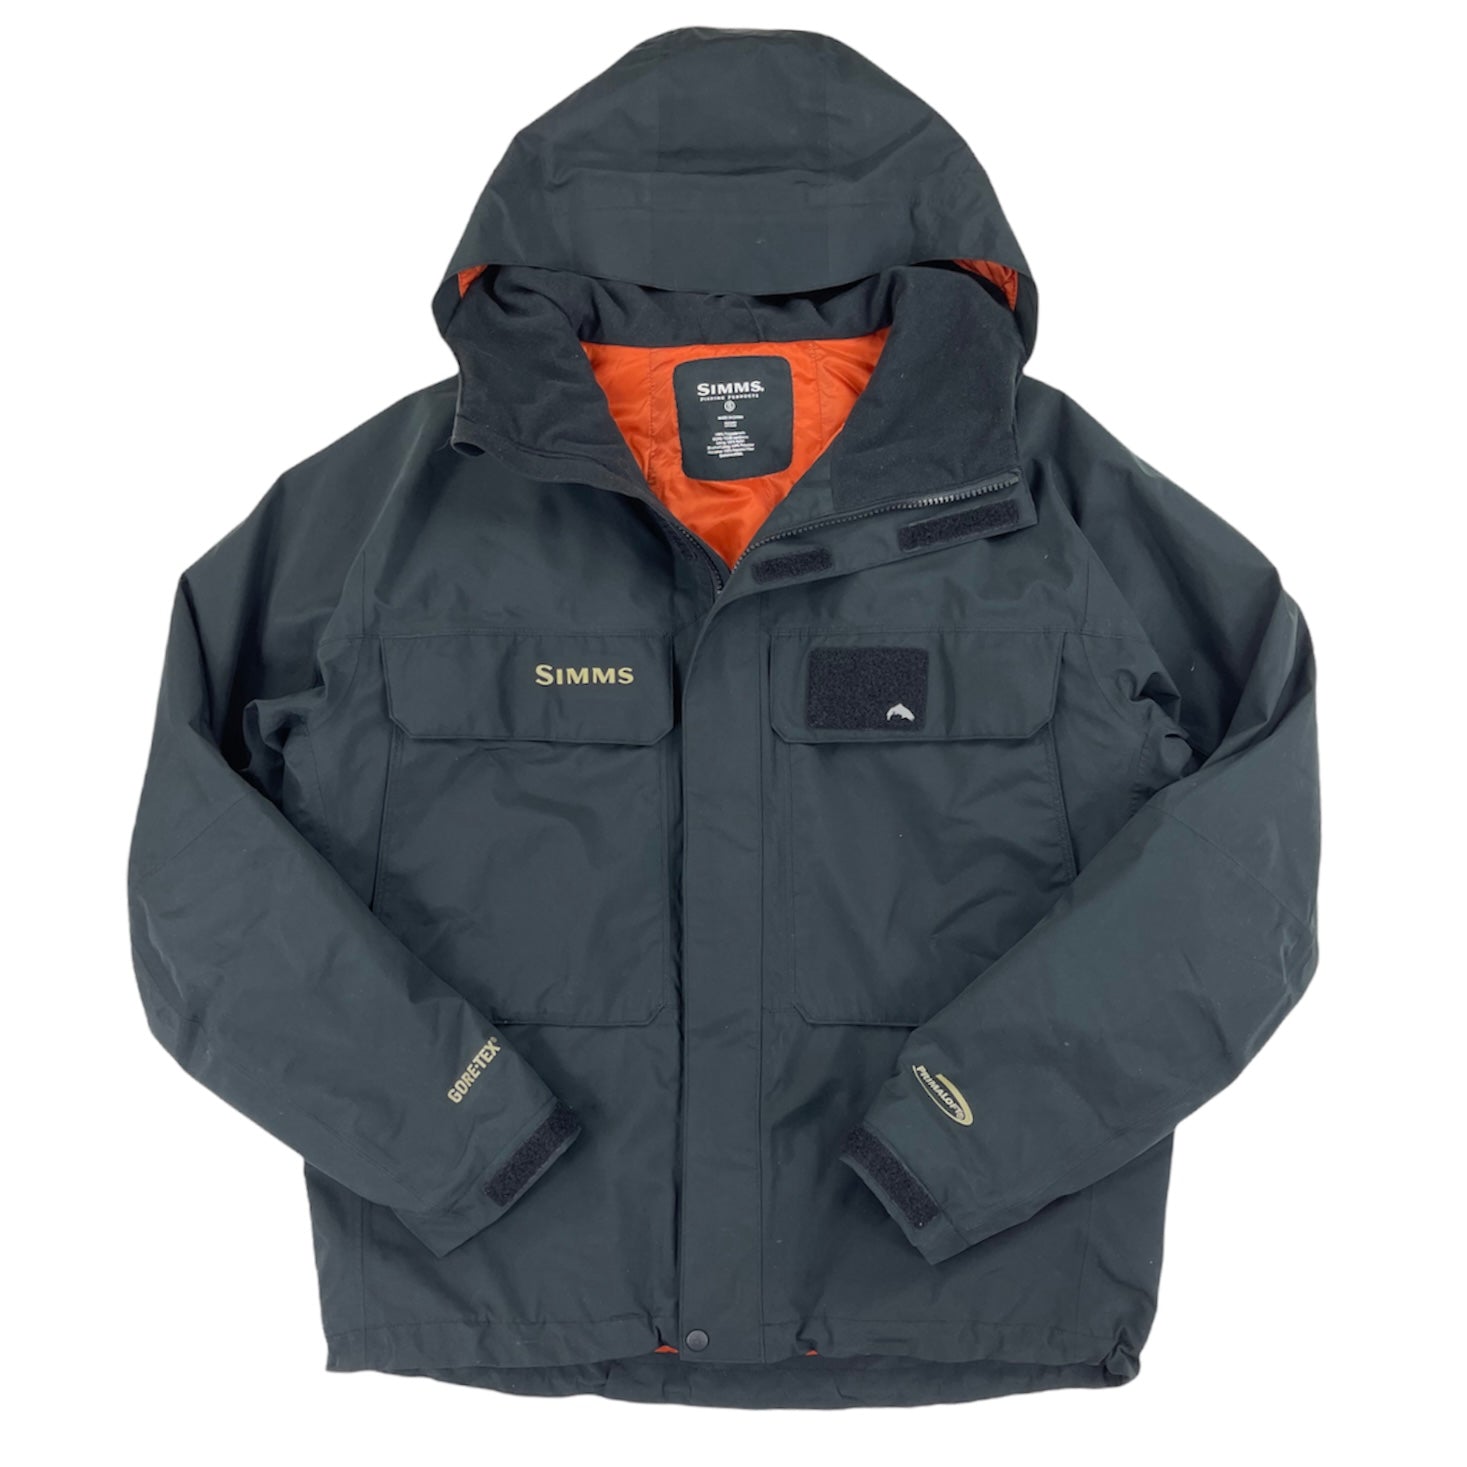 2000s Simms Primaloft Gore-tex wading jacket